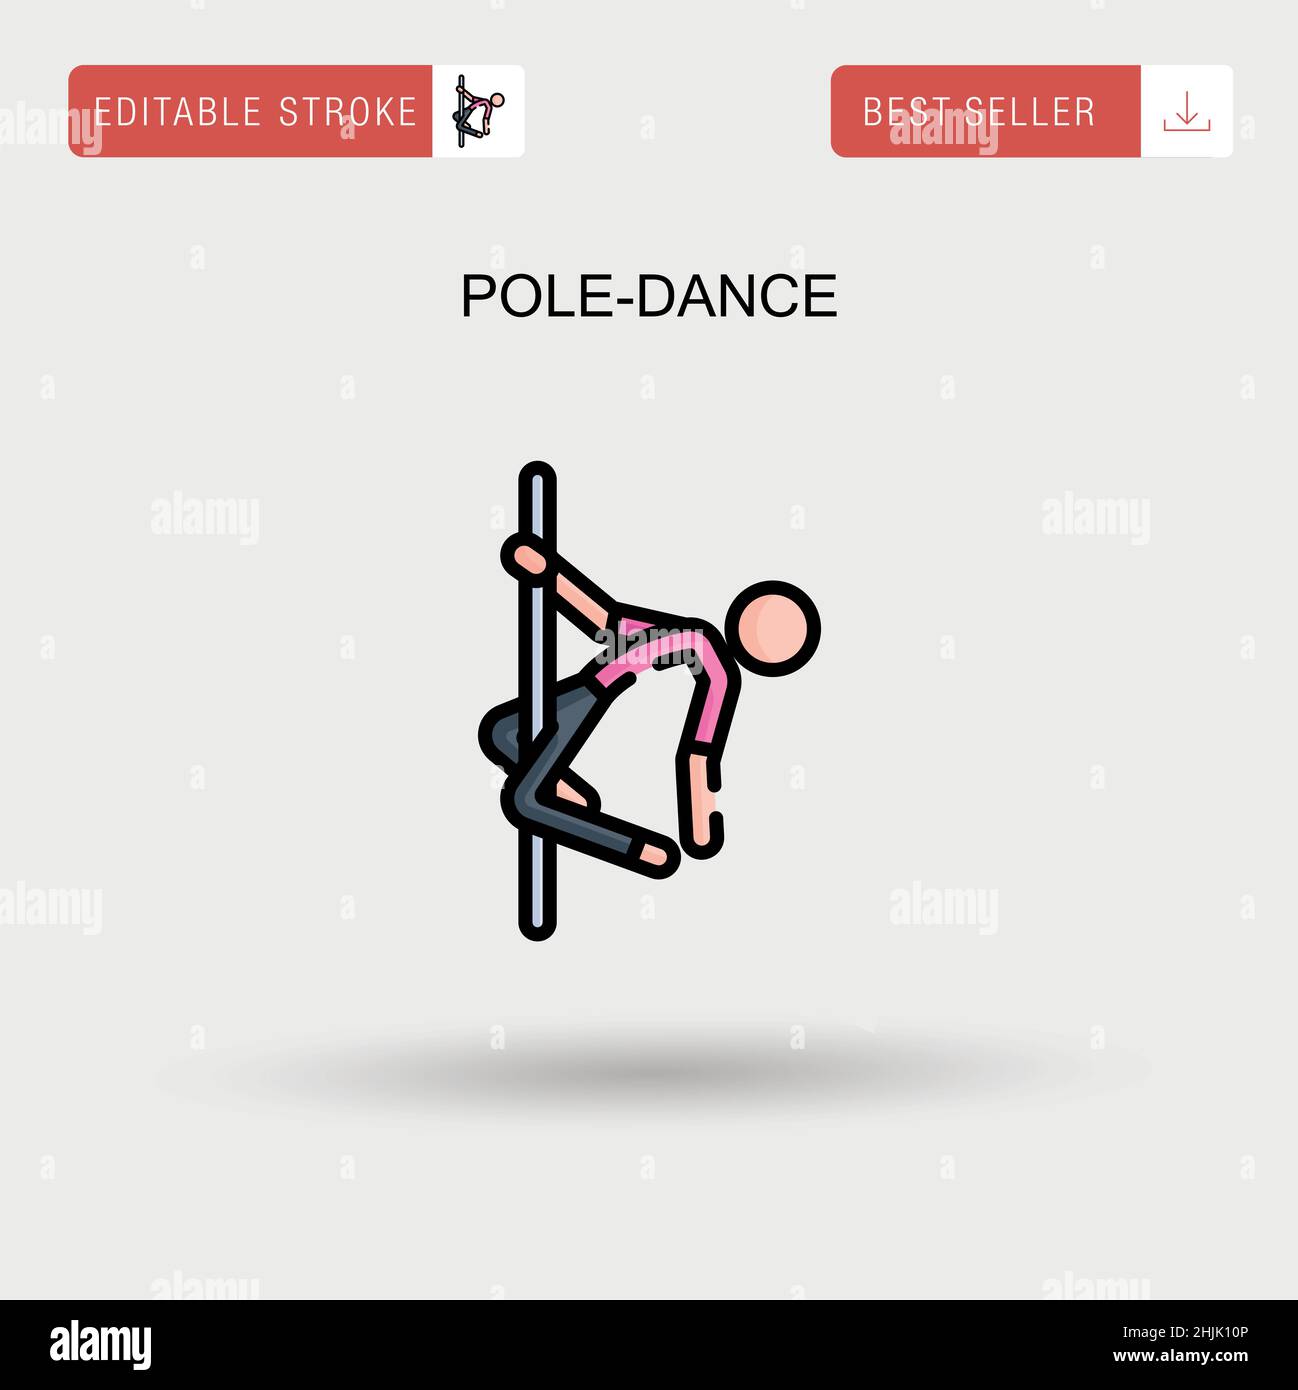 Pole-dance Simple vector icon. Stock Vector